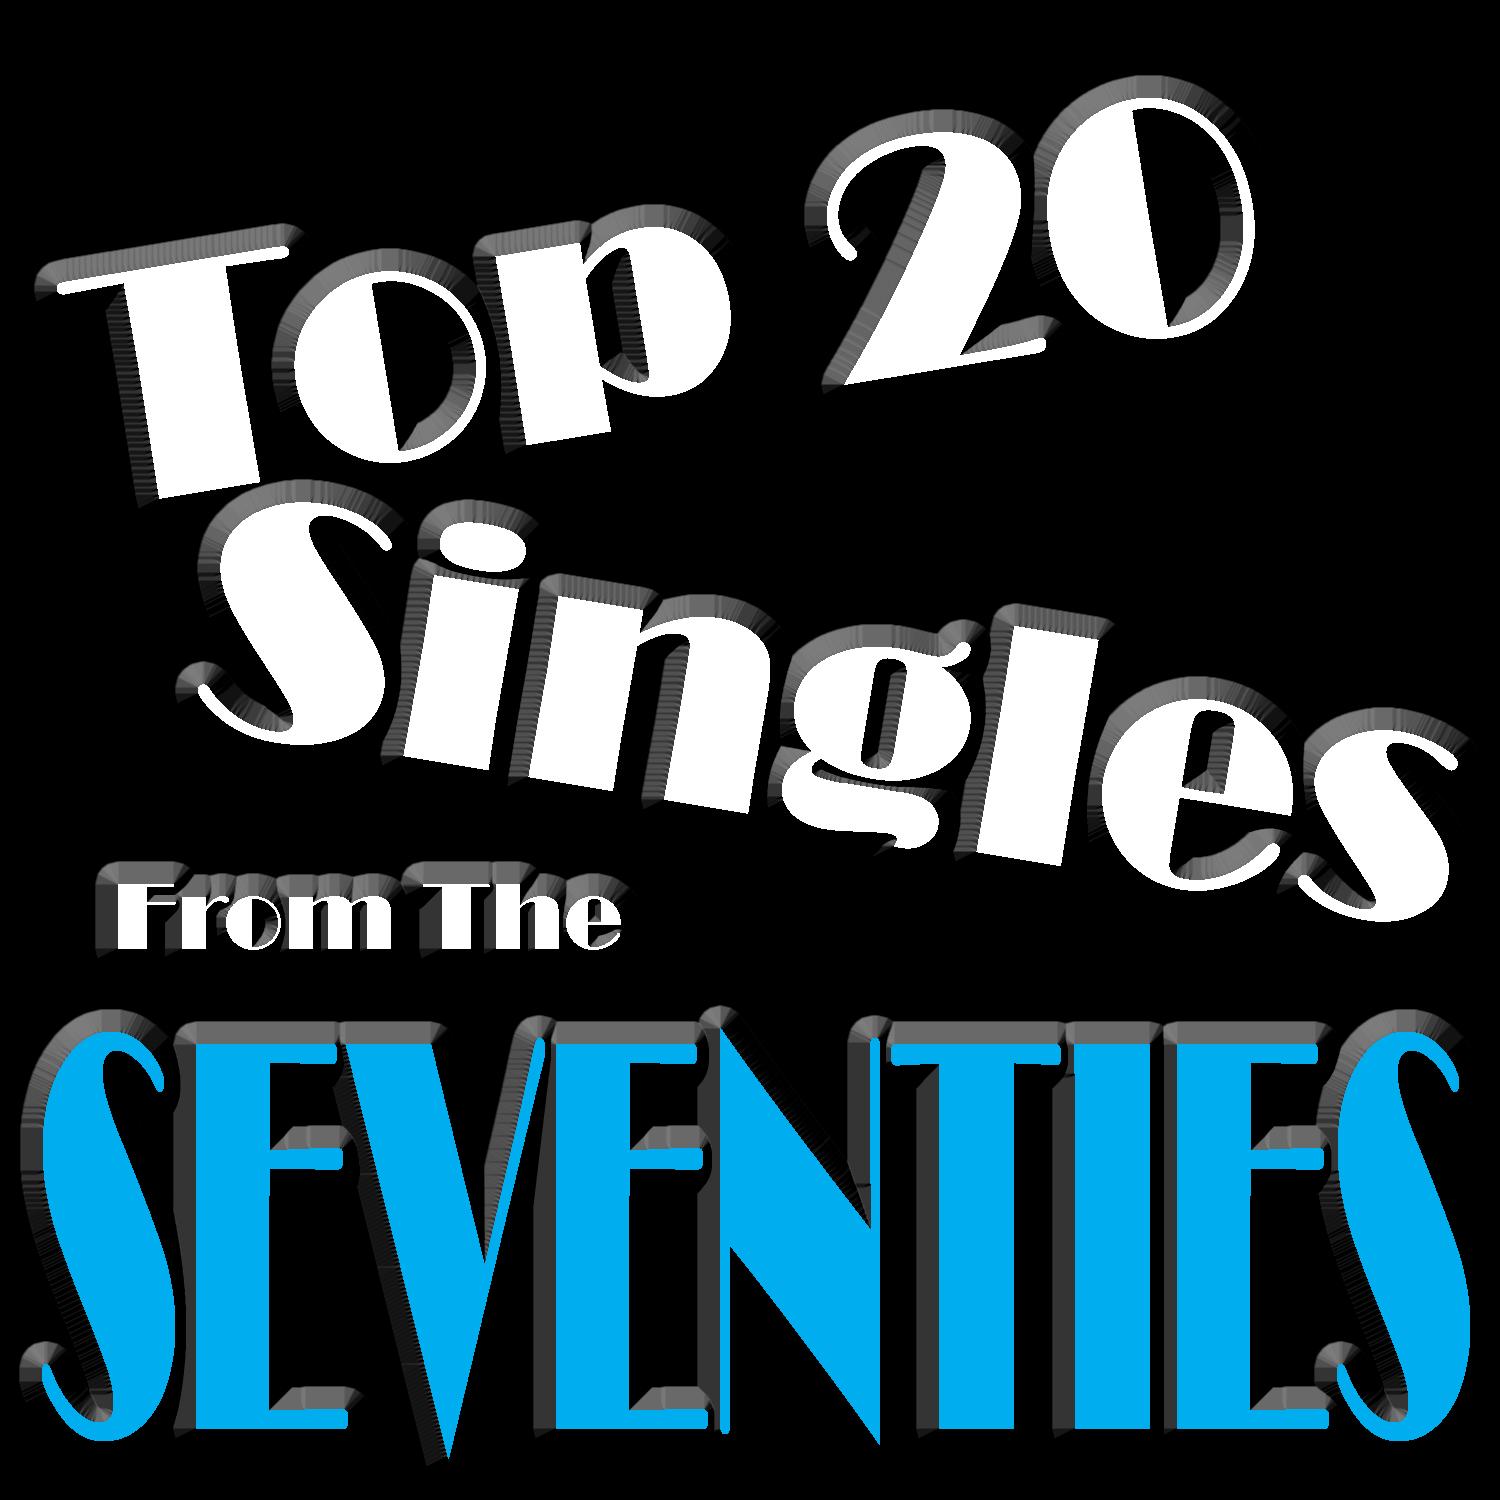 Top 20 Singles Of The Seventies